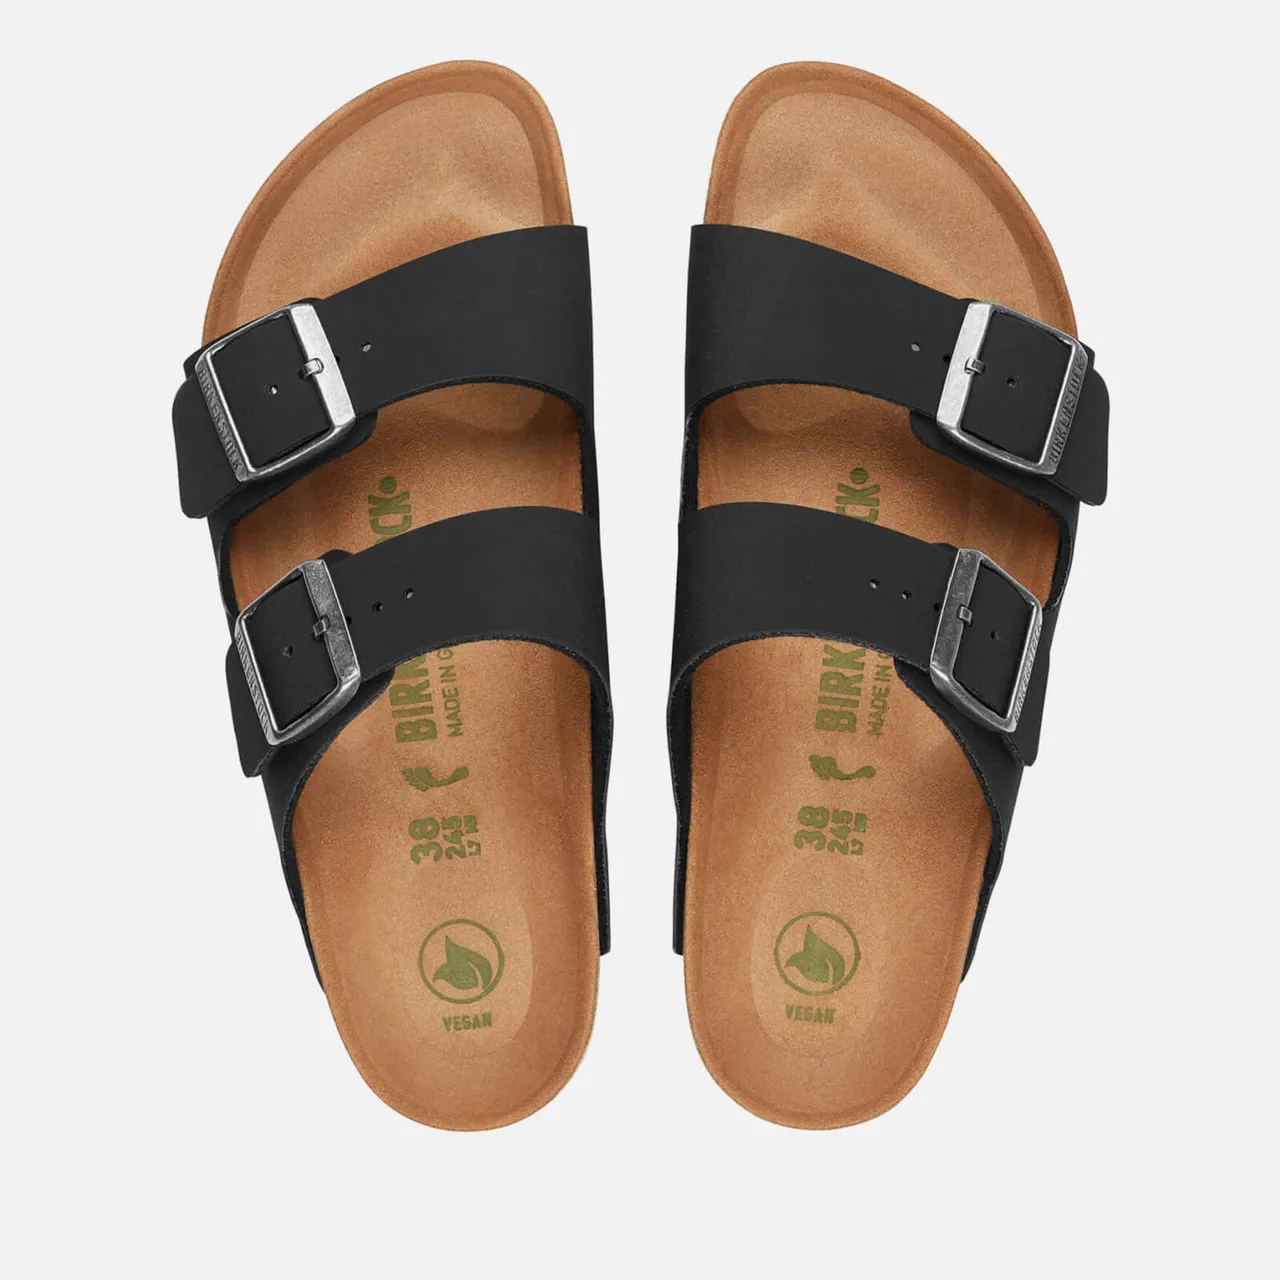 Birkenstock Men's Arizona Vegan Double Strap Sandals - Black - EU 43/UK